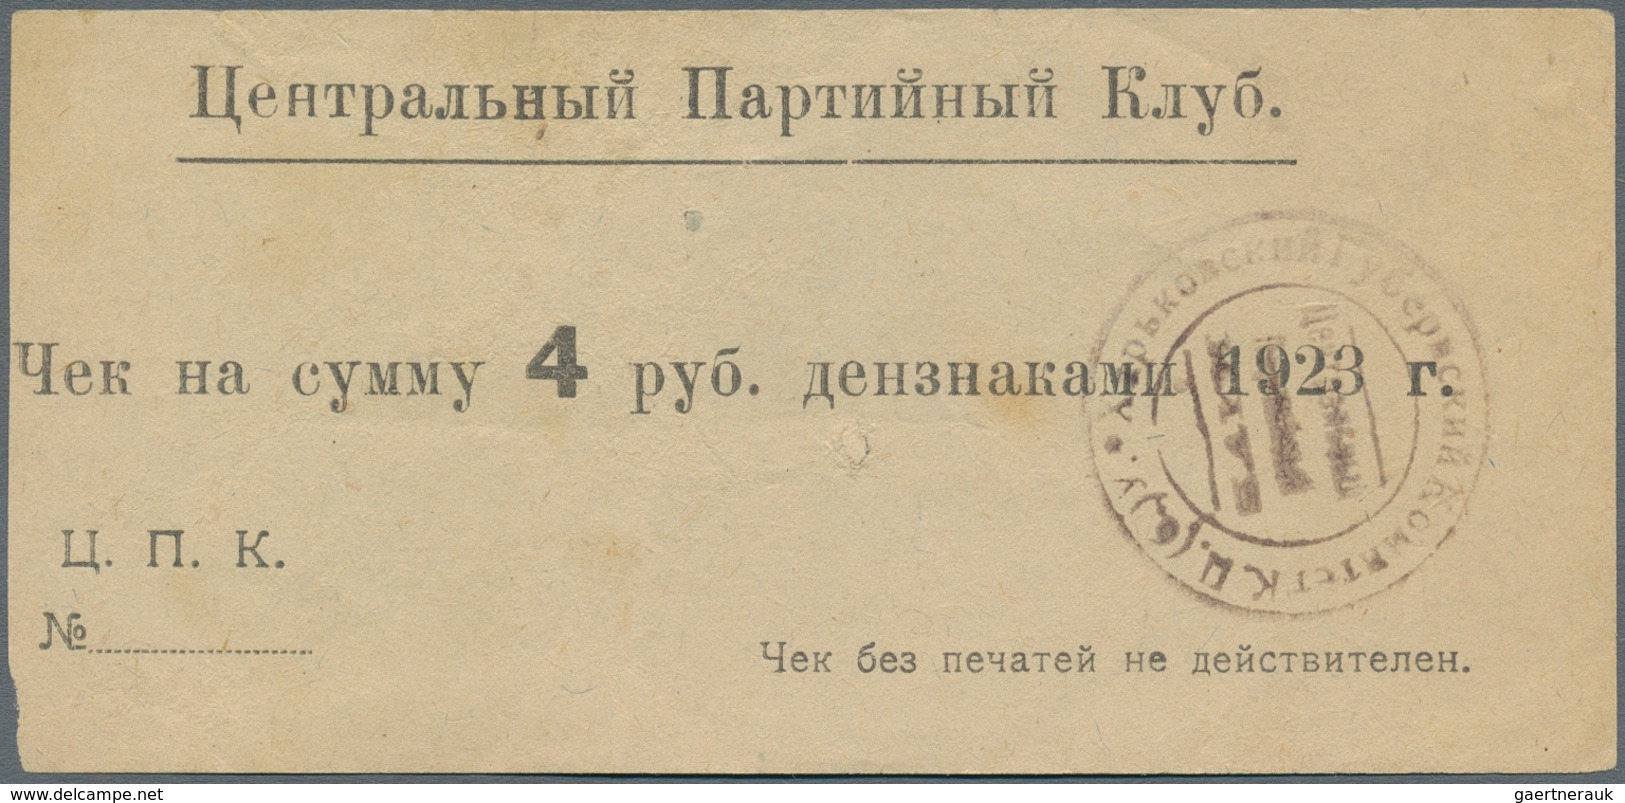 Ukraina / Ukraine: Voucher For 4 Rubles 1923, P.NL (R 18945), Tiny Hole At Center, Some Minor Crease - Ukraine